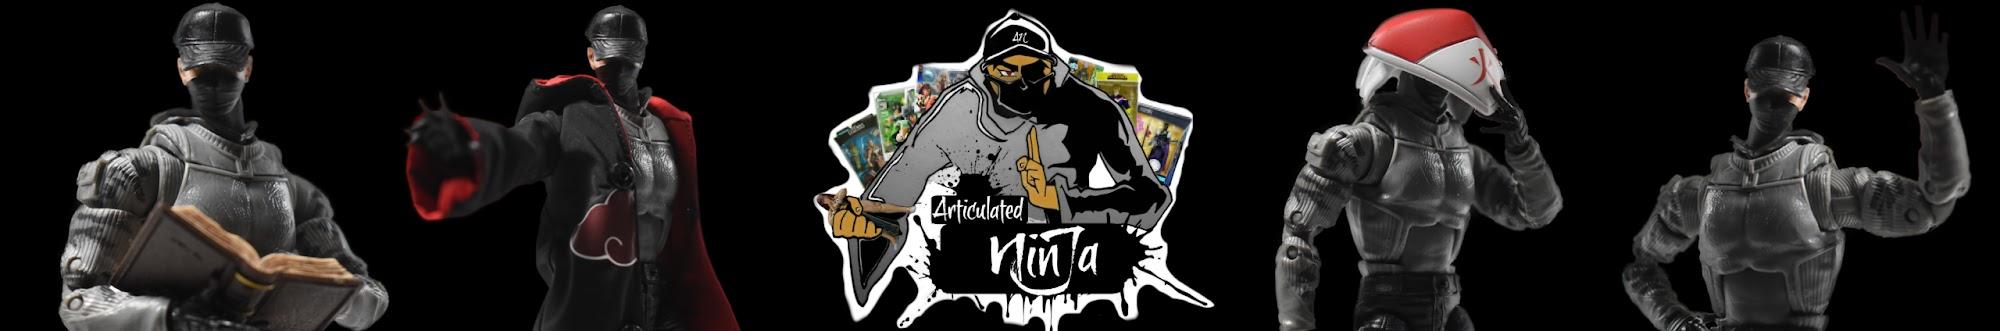 Articulated Ninja Reviews